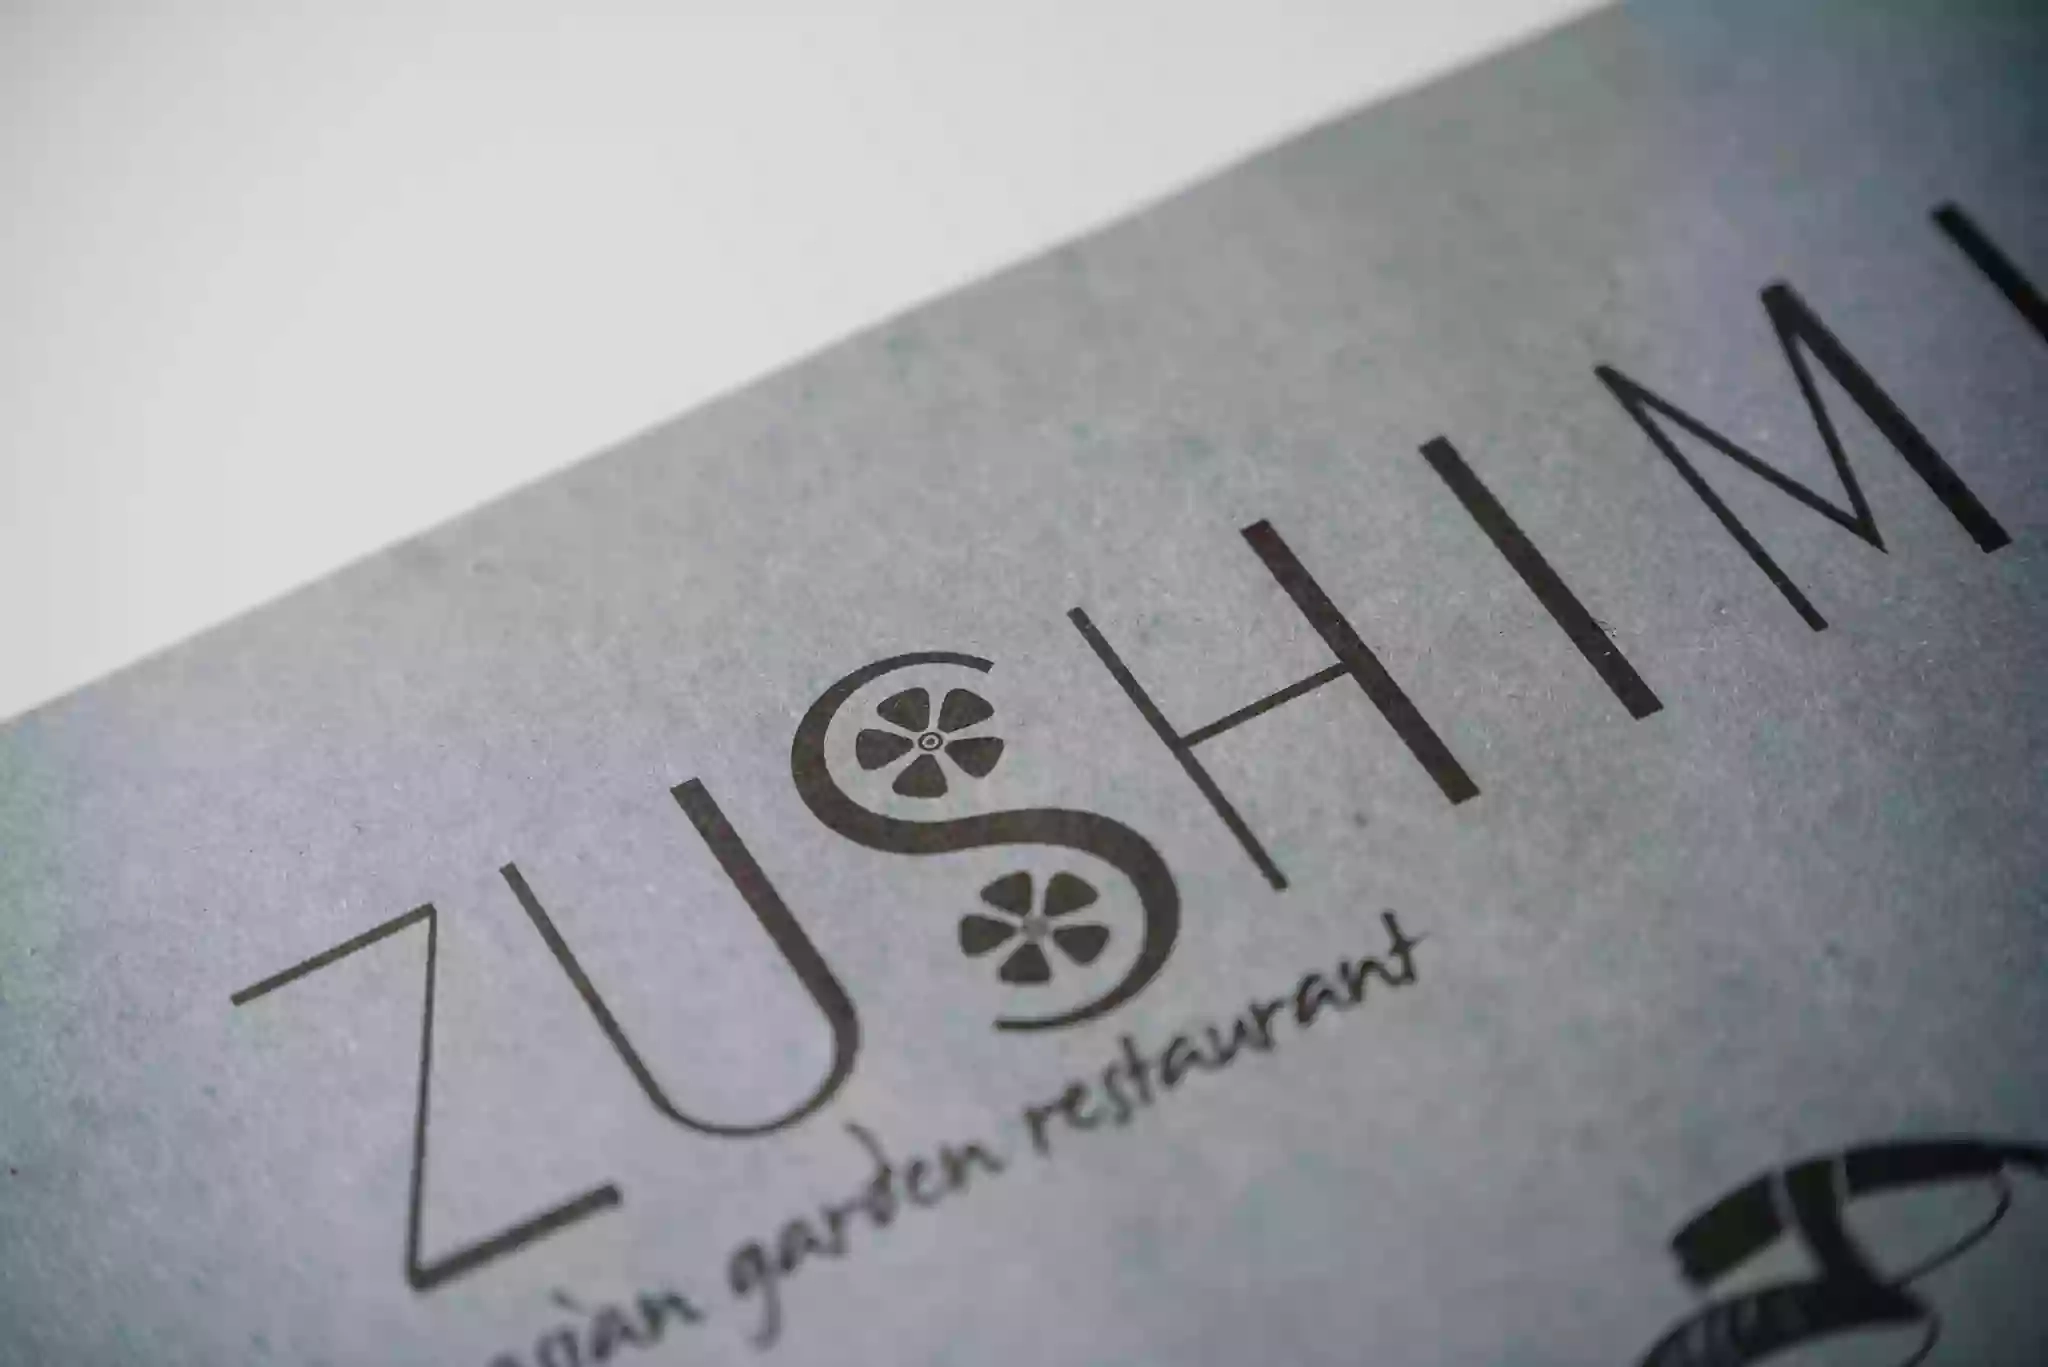 ZUSHIMI Asian Garden Restaurant